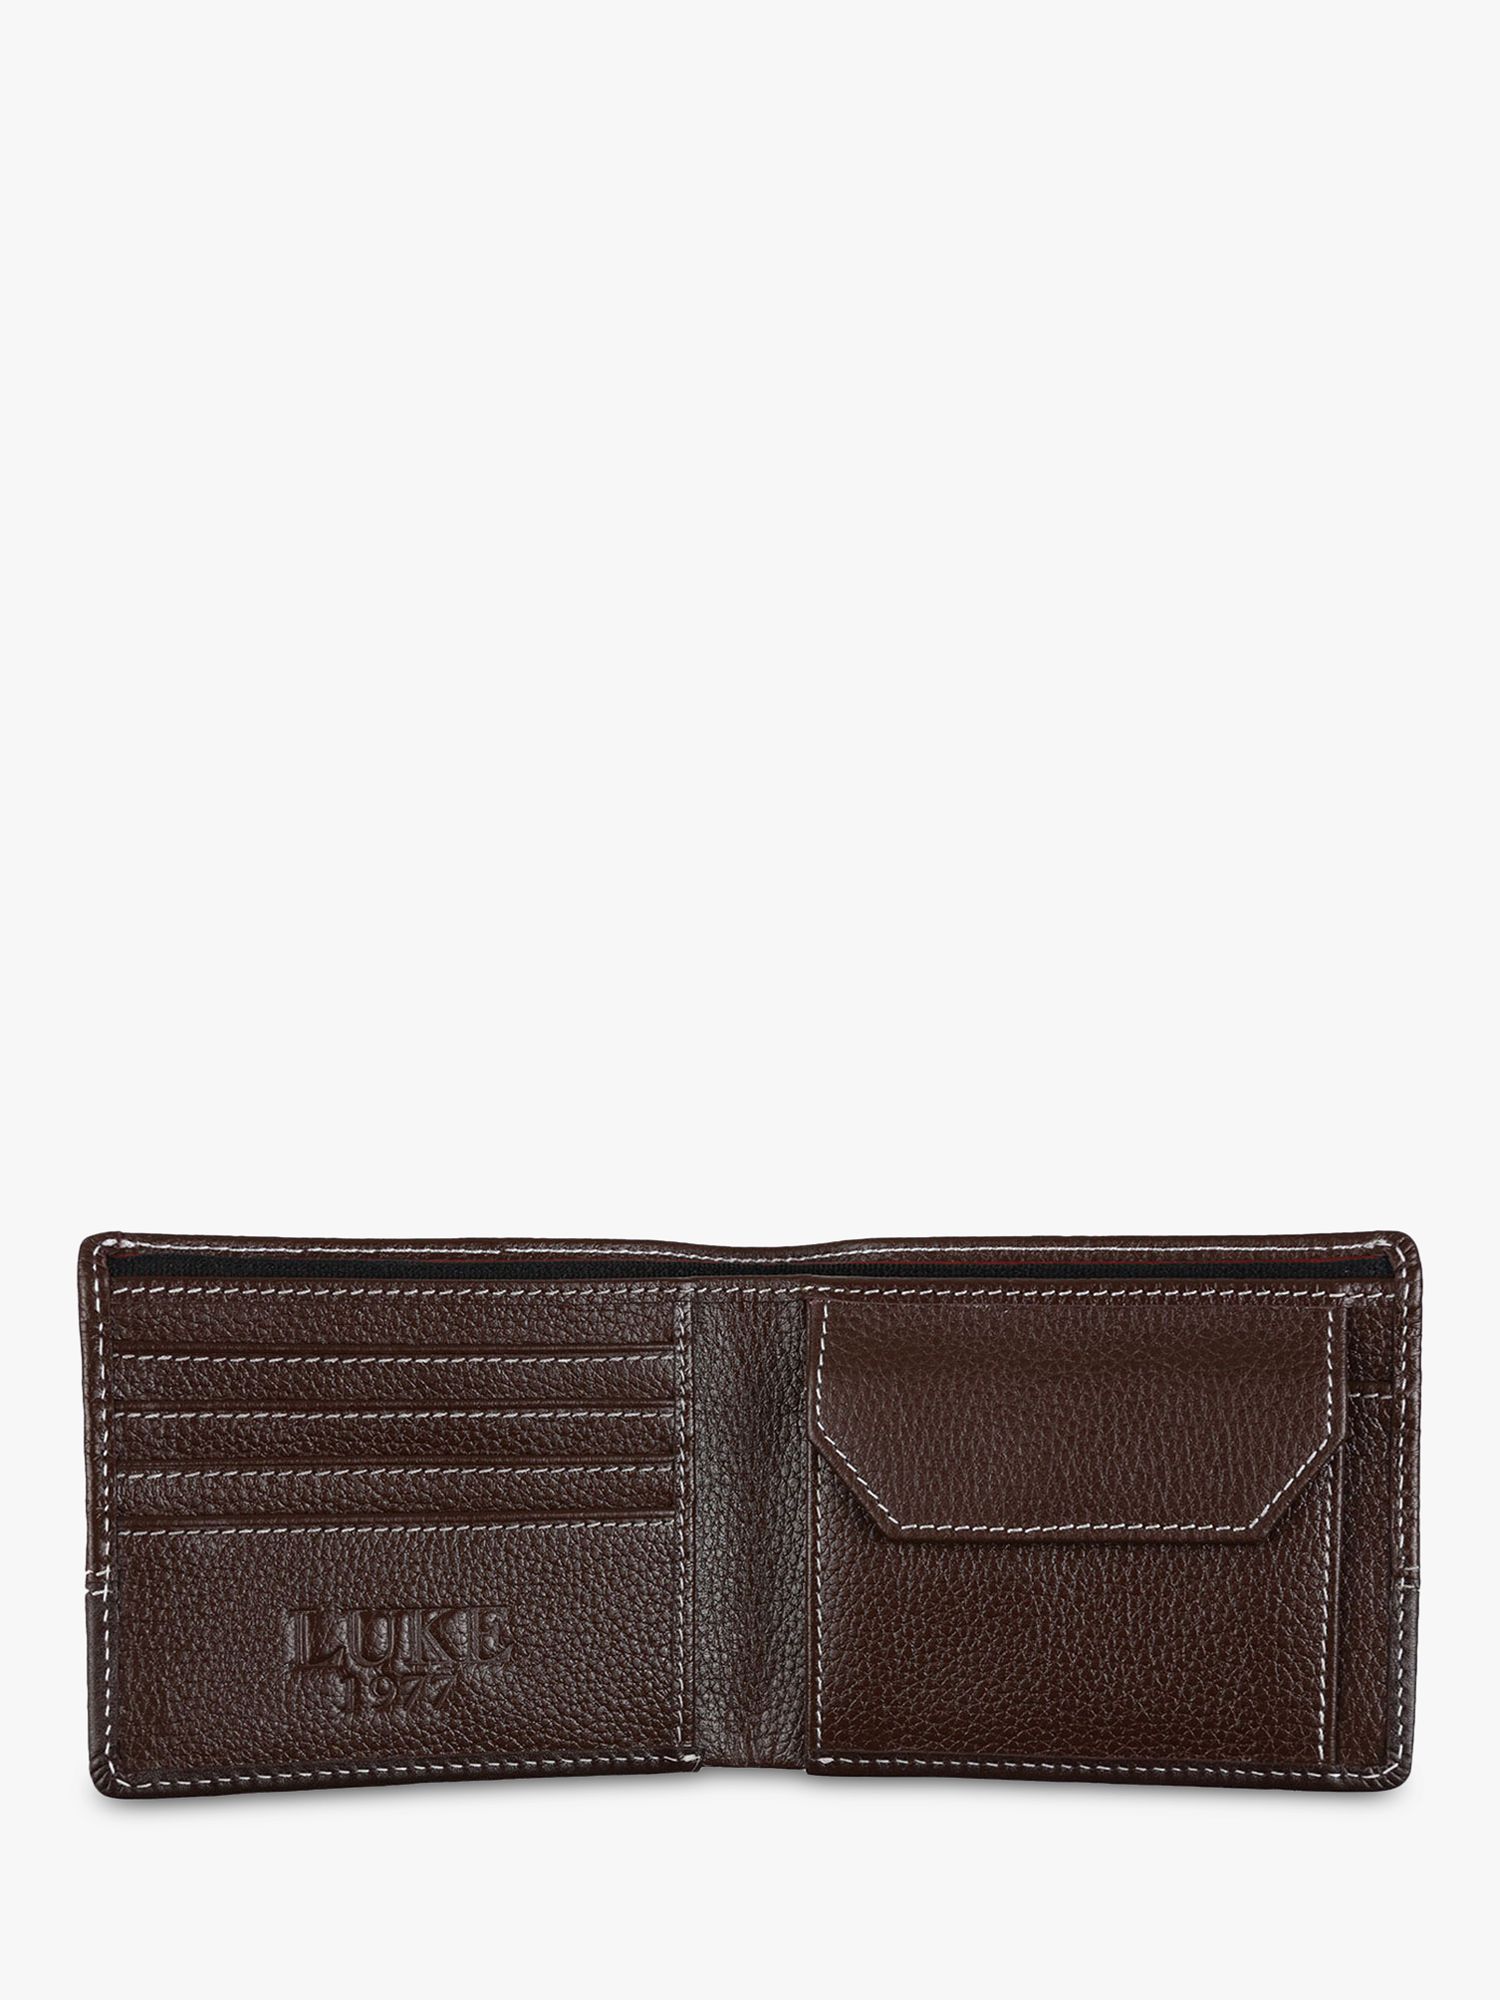 Buy LUKE 1977 Volcombe Leather Wallet Online at johnlewis.com